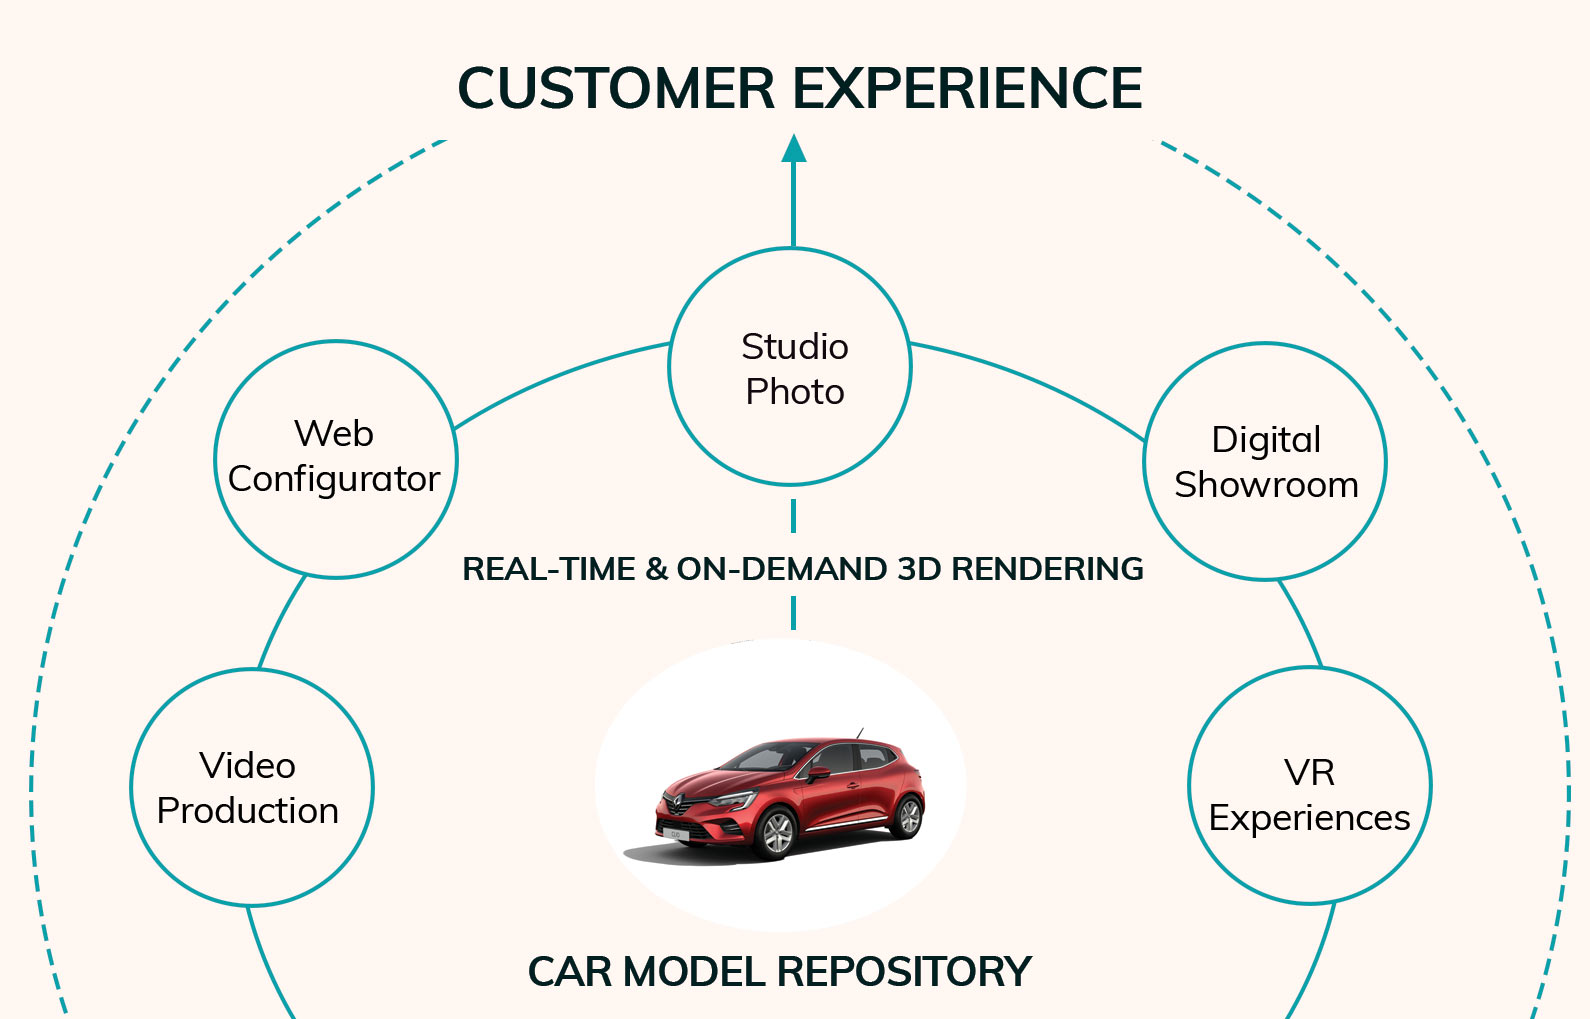 Car model repository experiences